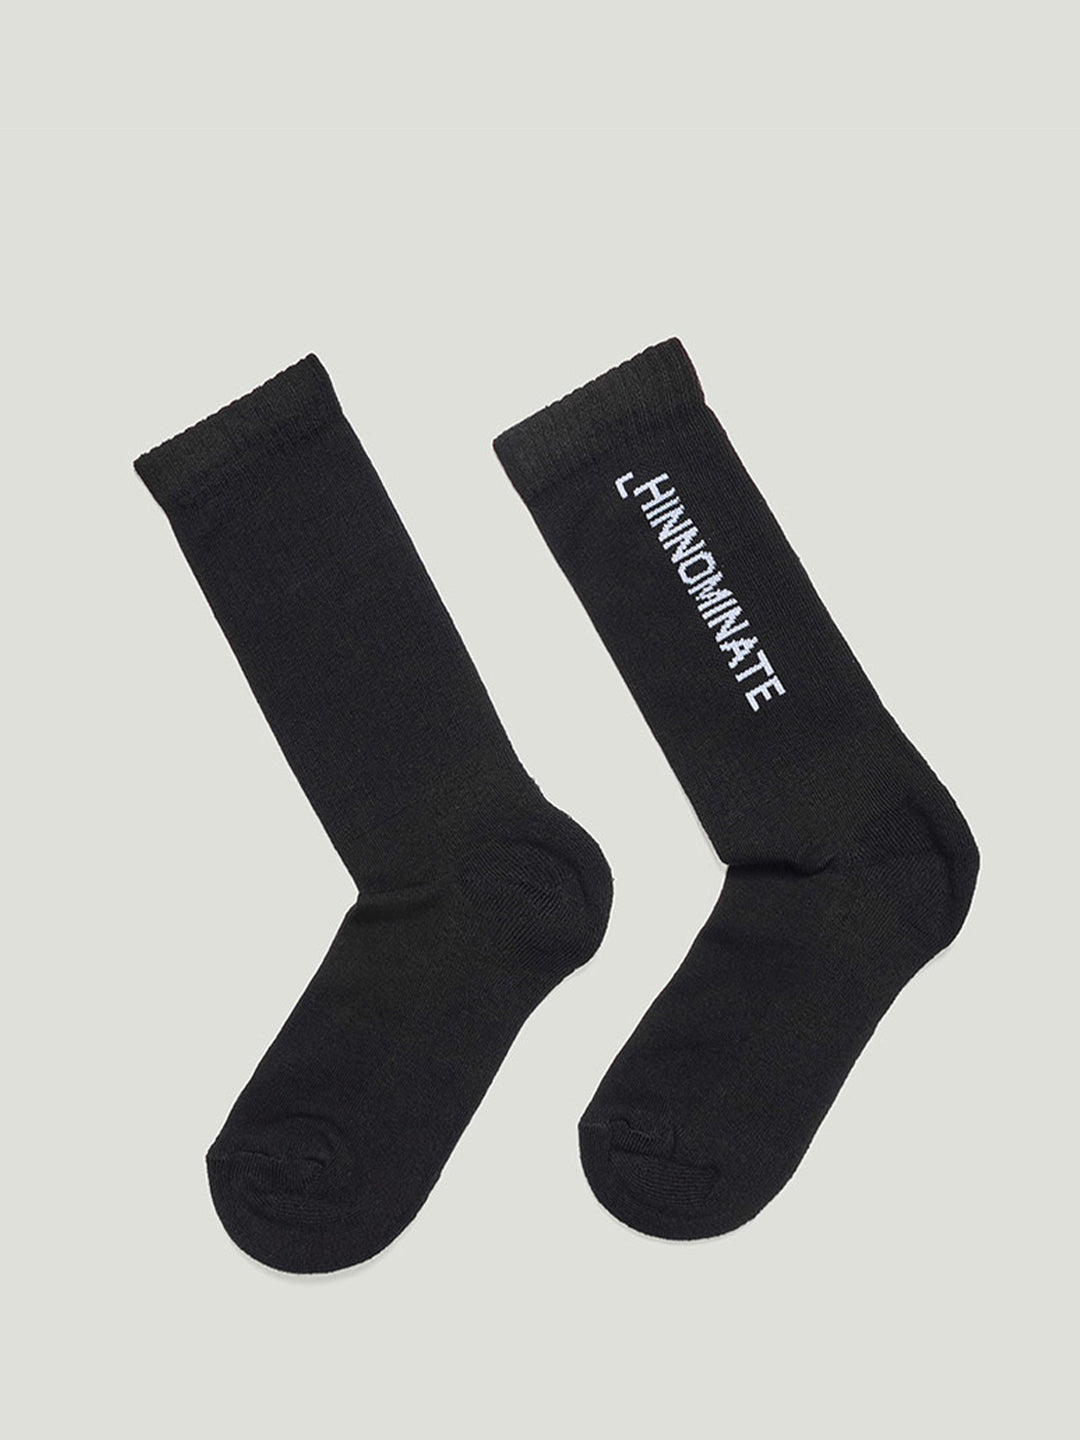 Hinnominate black socks with print